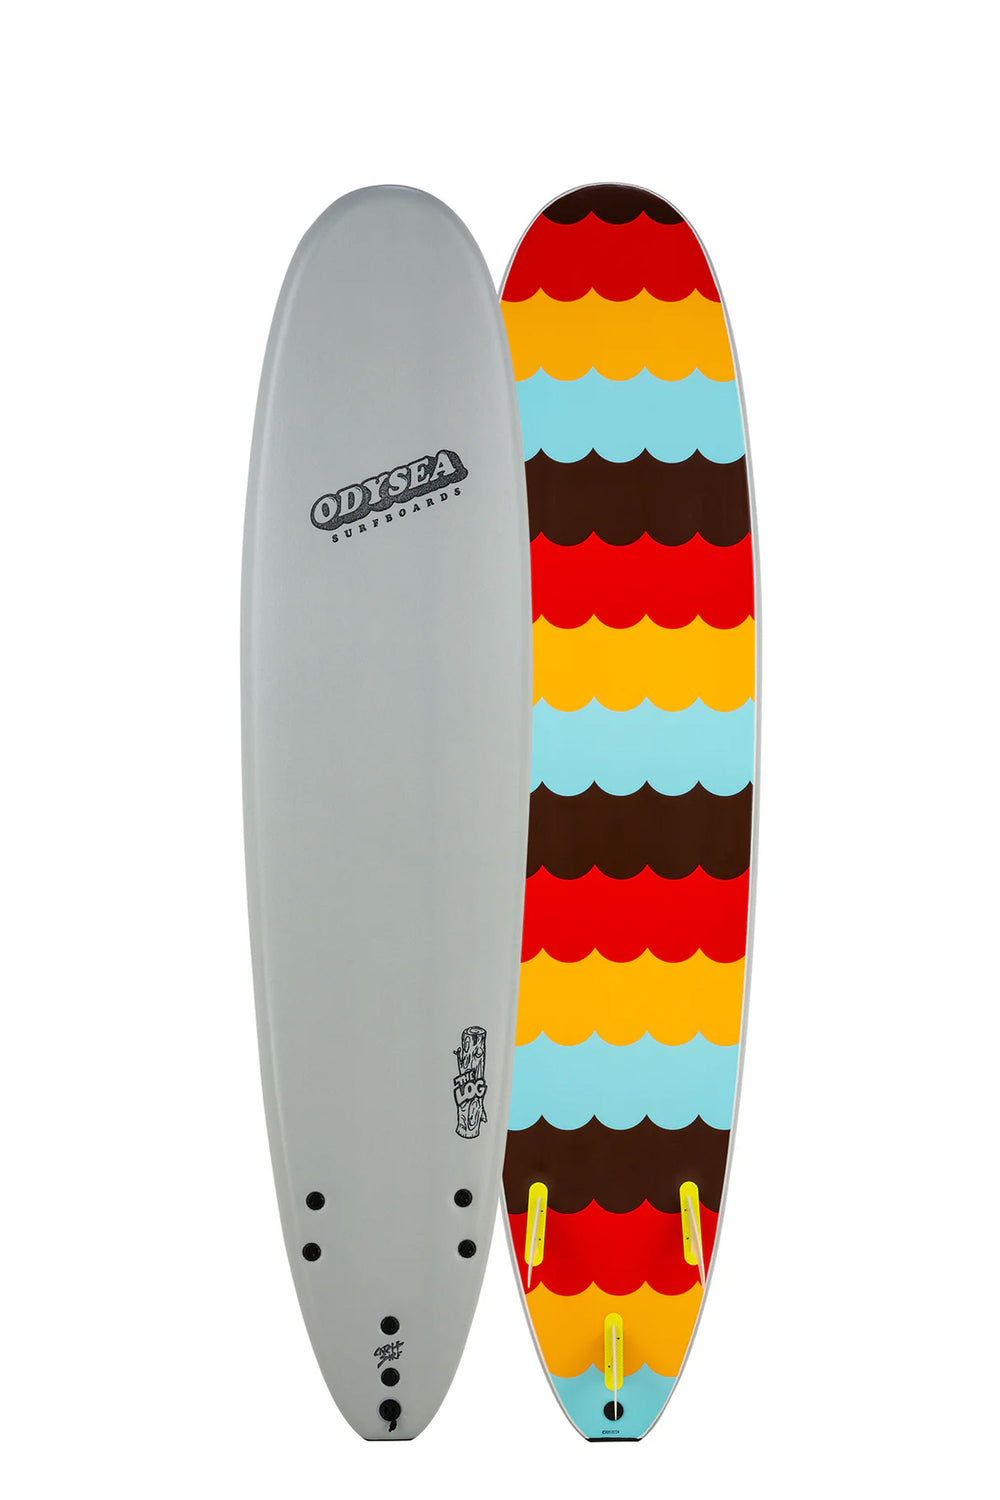 Pukas-Surf-Shop-Catch-Surfboards-Odysea-log-8_0